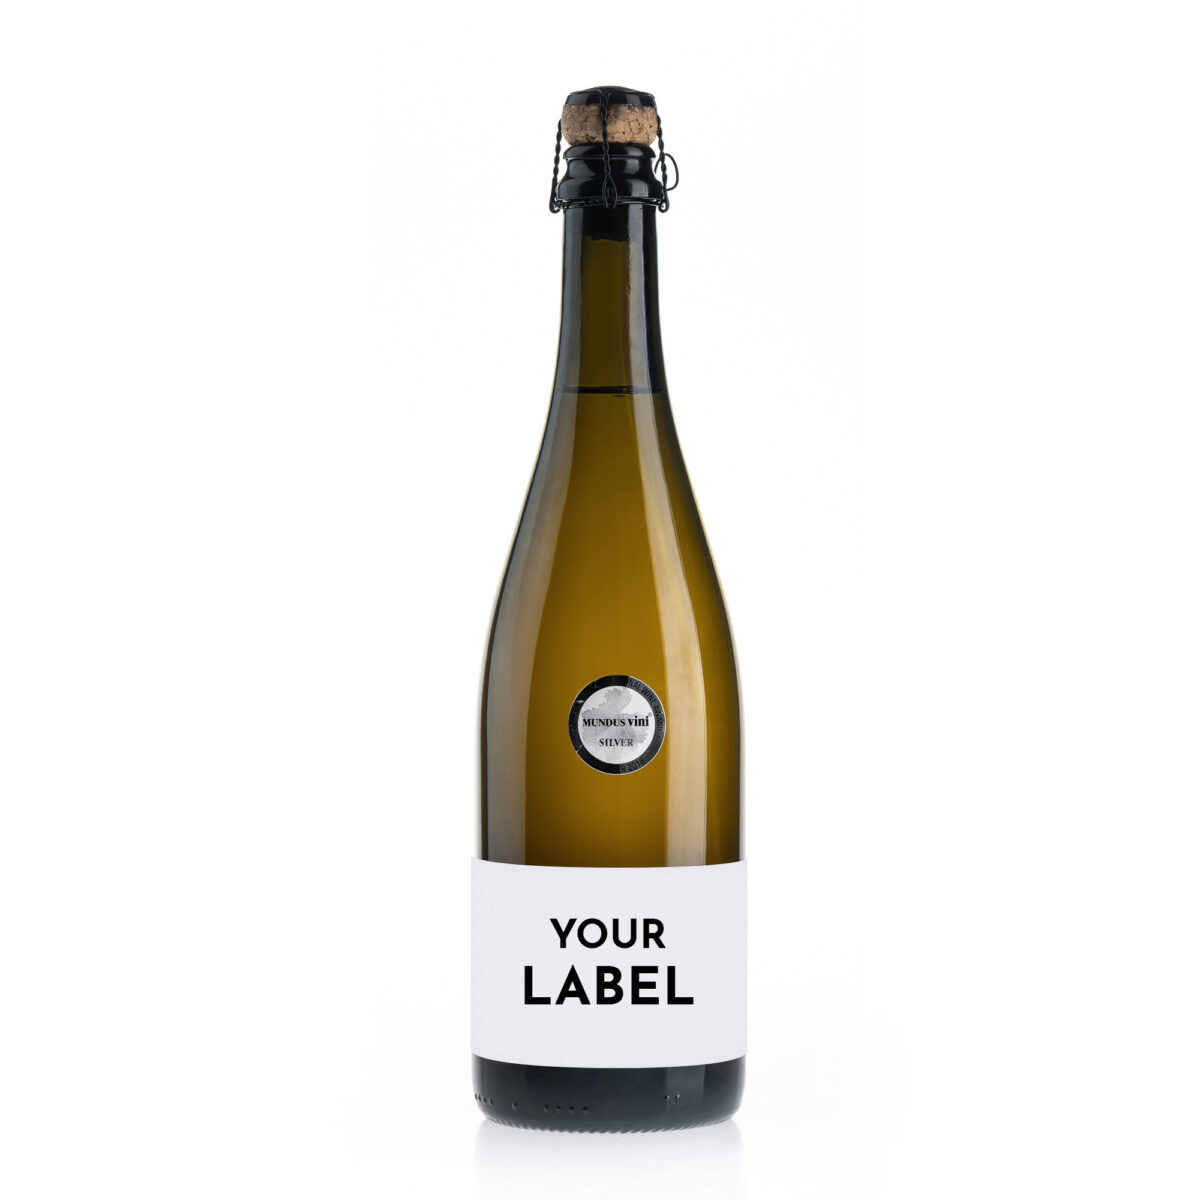 Taudtmann Riesling Sekt brut nature traditional bottle fermentation with own label